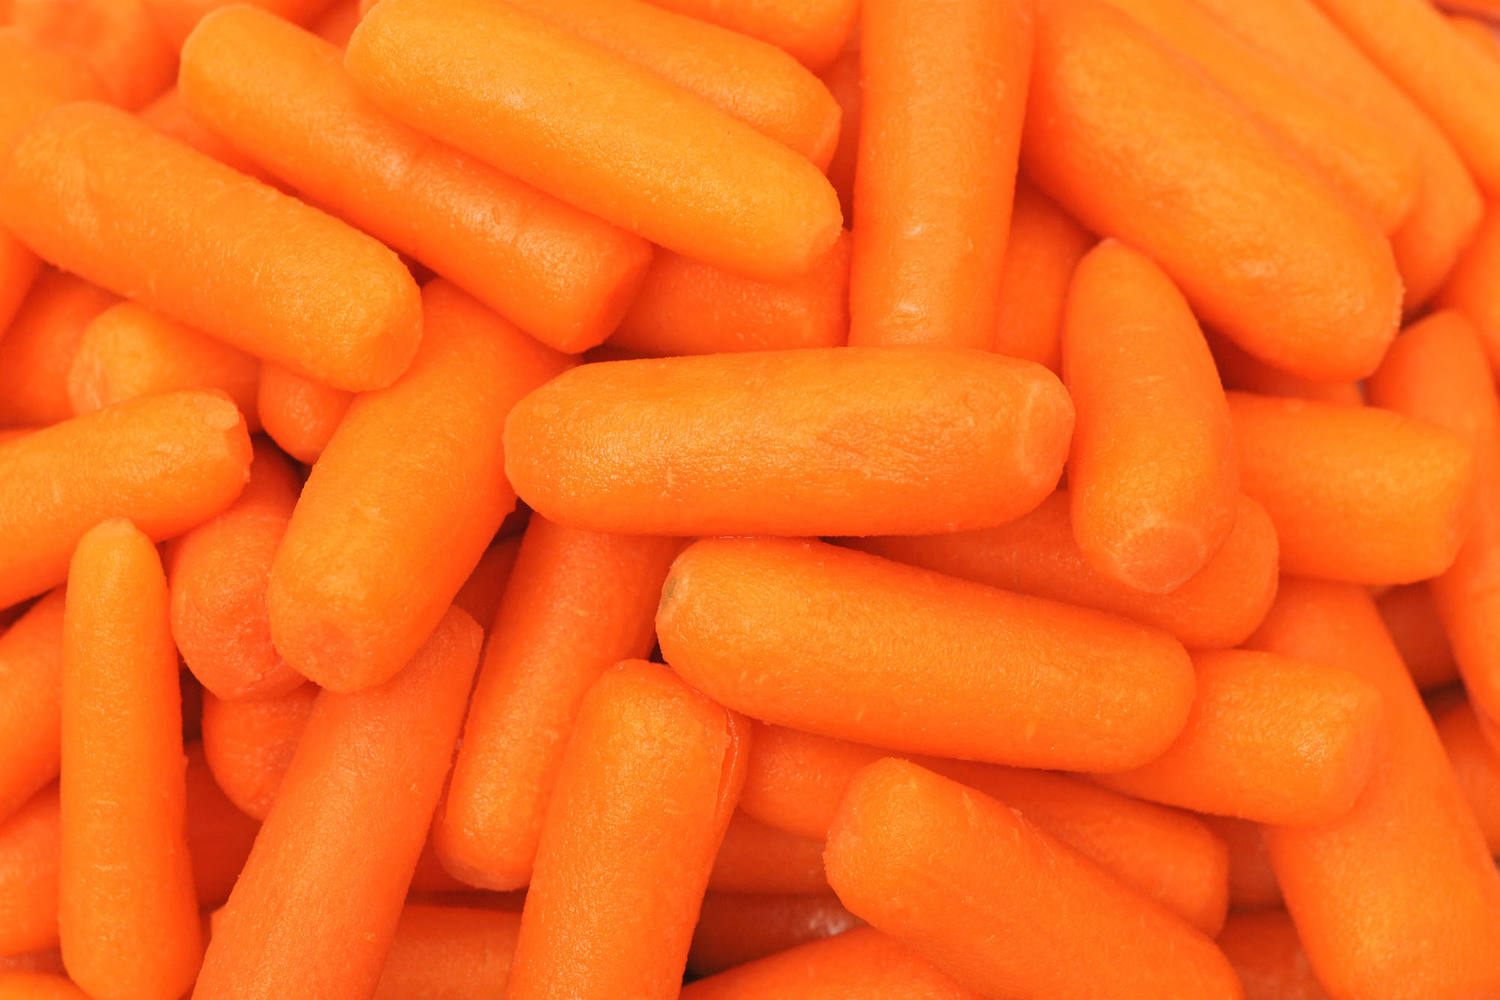 Bébé carottes moyennes 1kg pièce 3